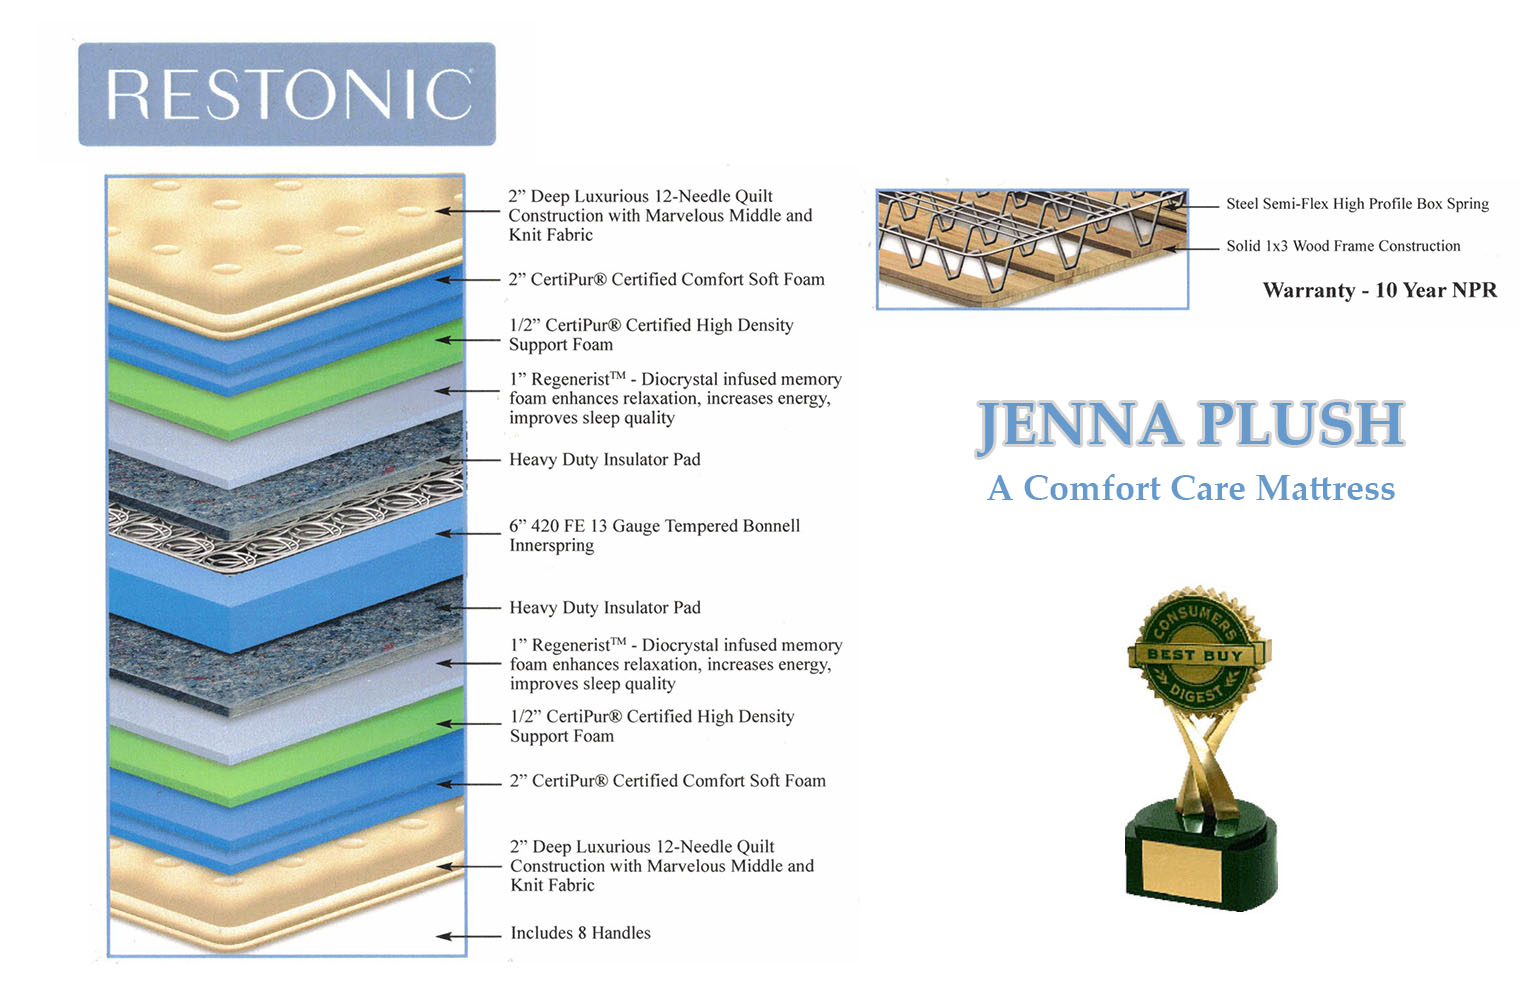 specs inside mattress restonic comfort care clare bedding plush best double sided flip mattress